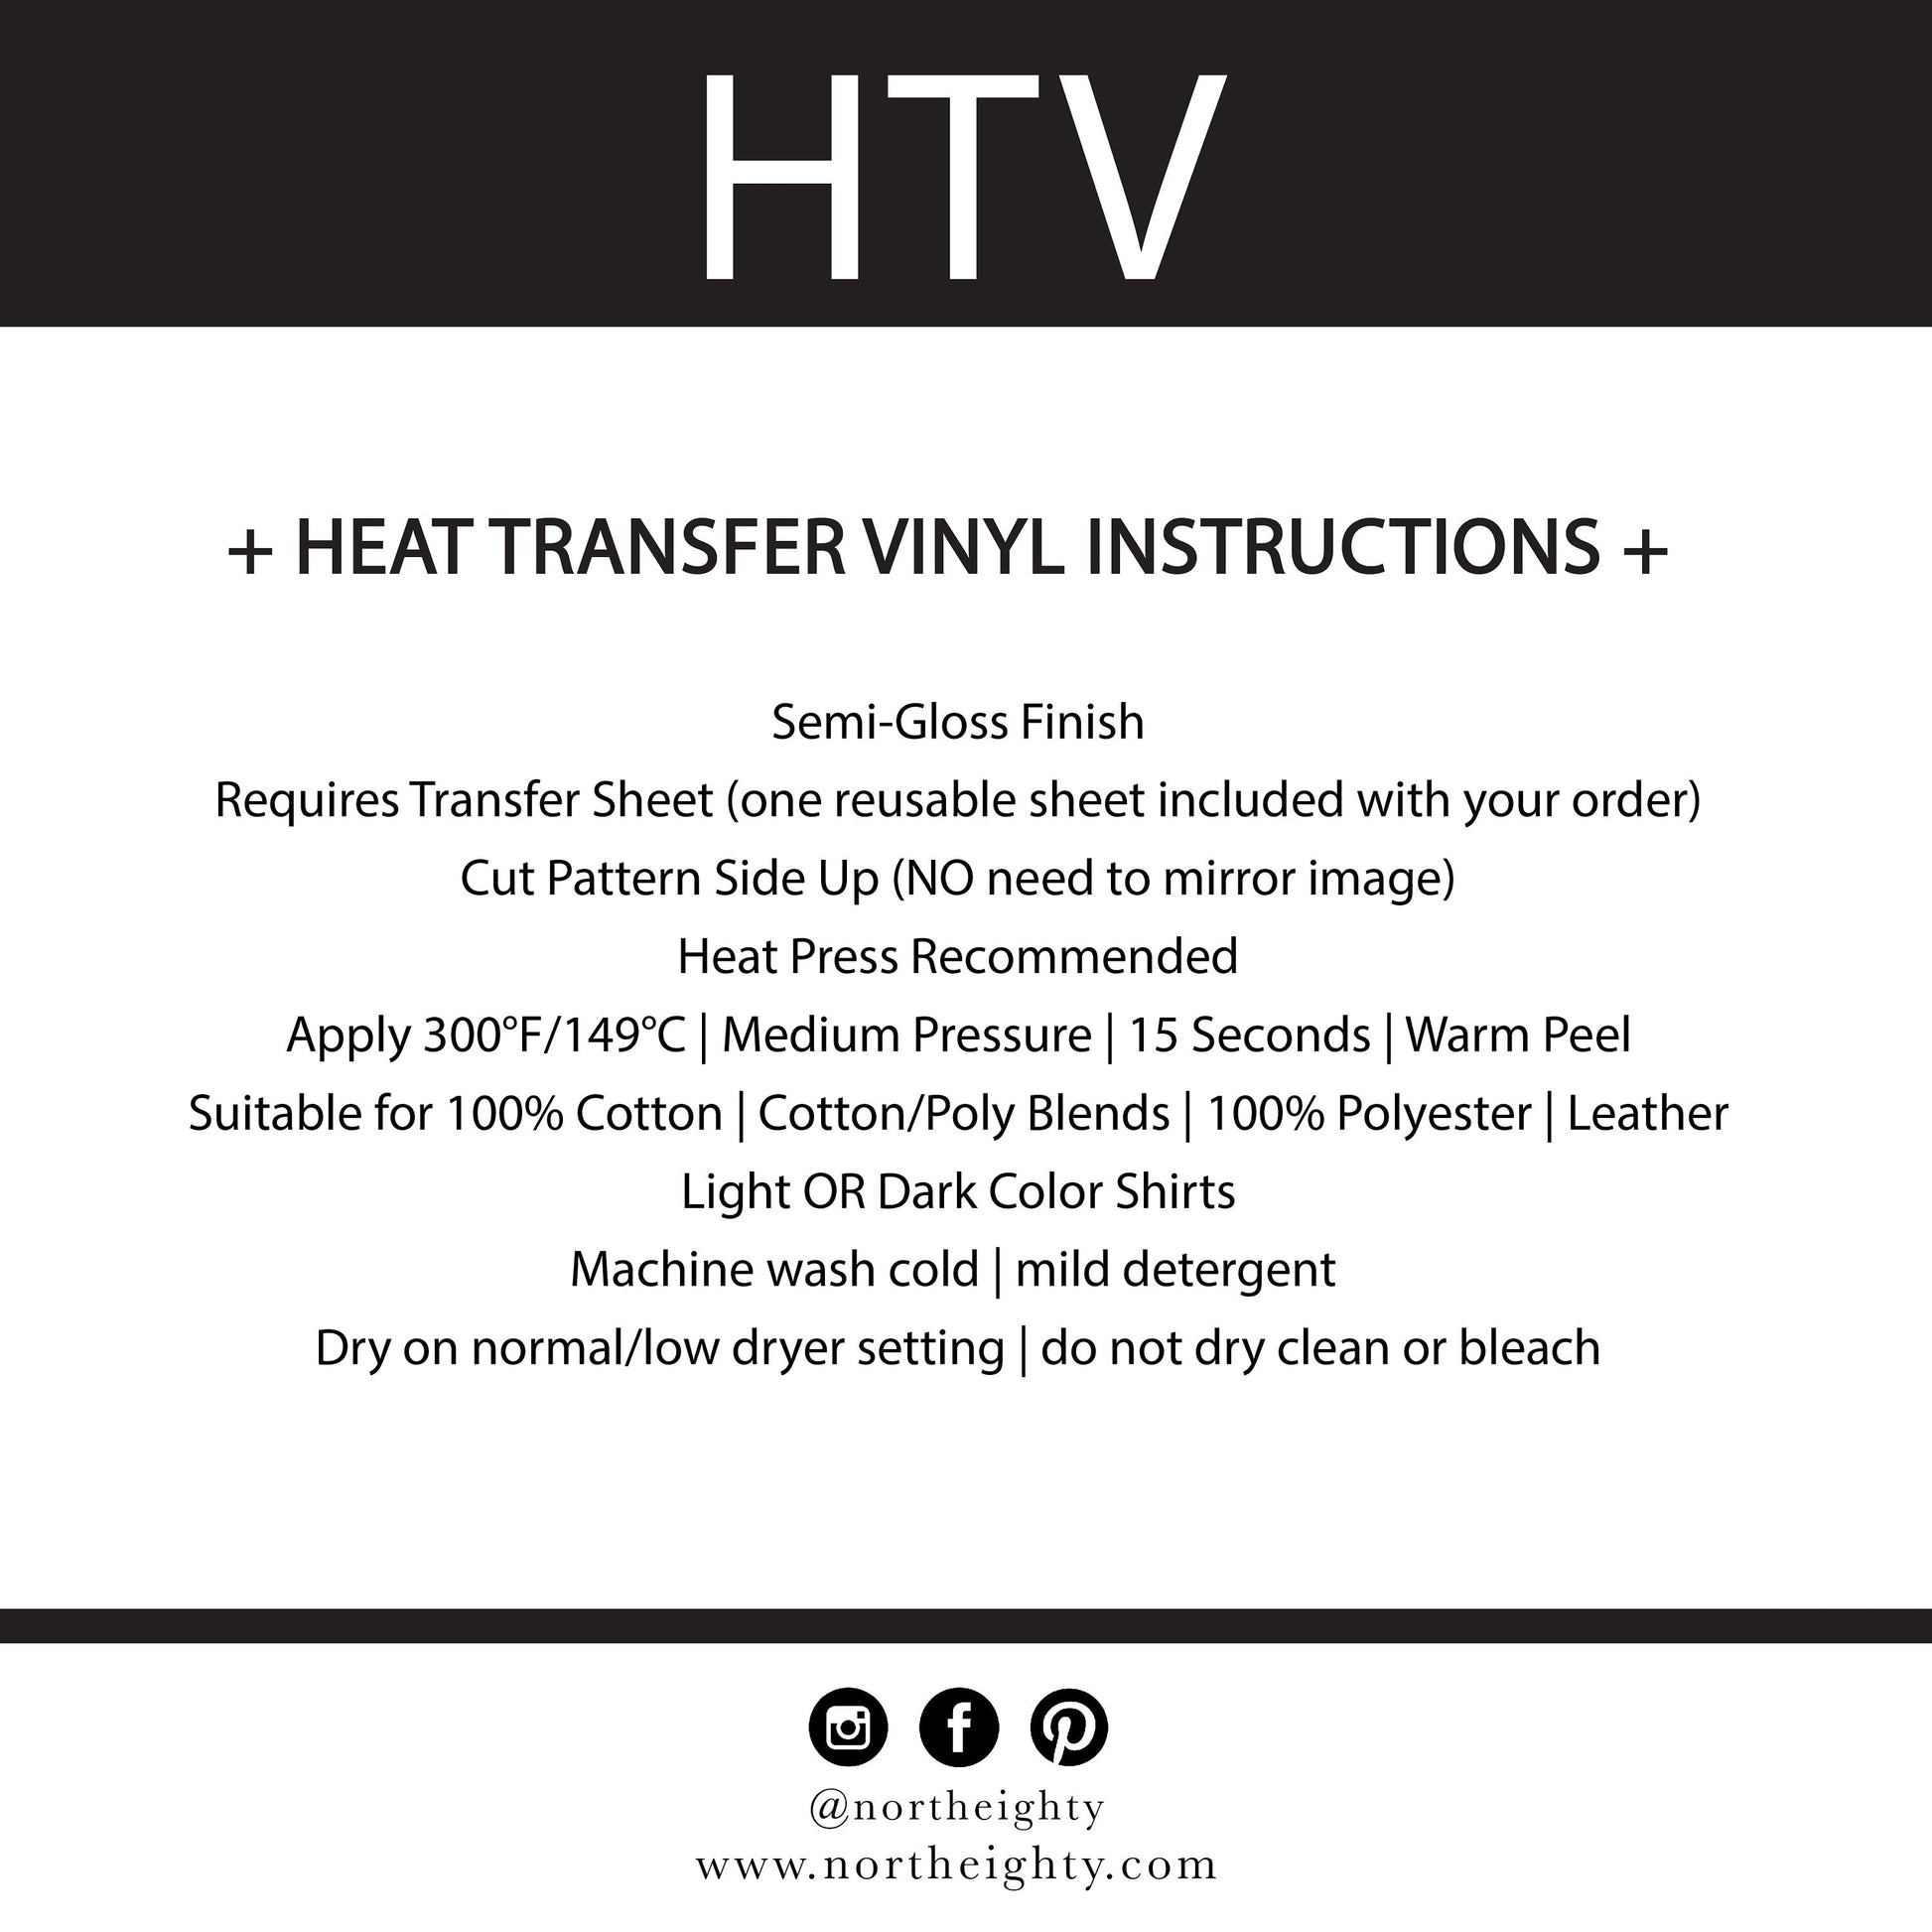 HTV - Geode Vinyl - Marble Printed htv - Printed Vinyl - Watercolor - Geode - Agate - Texture htv - Alcohol Ink htv